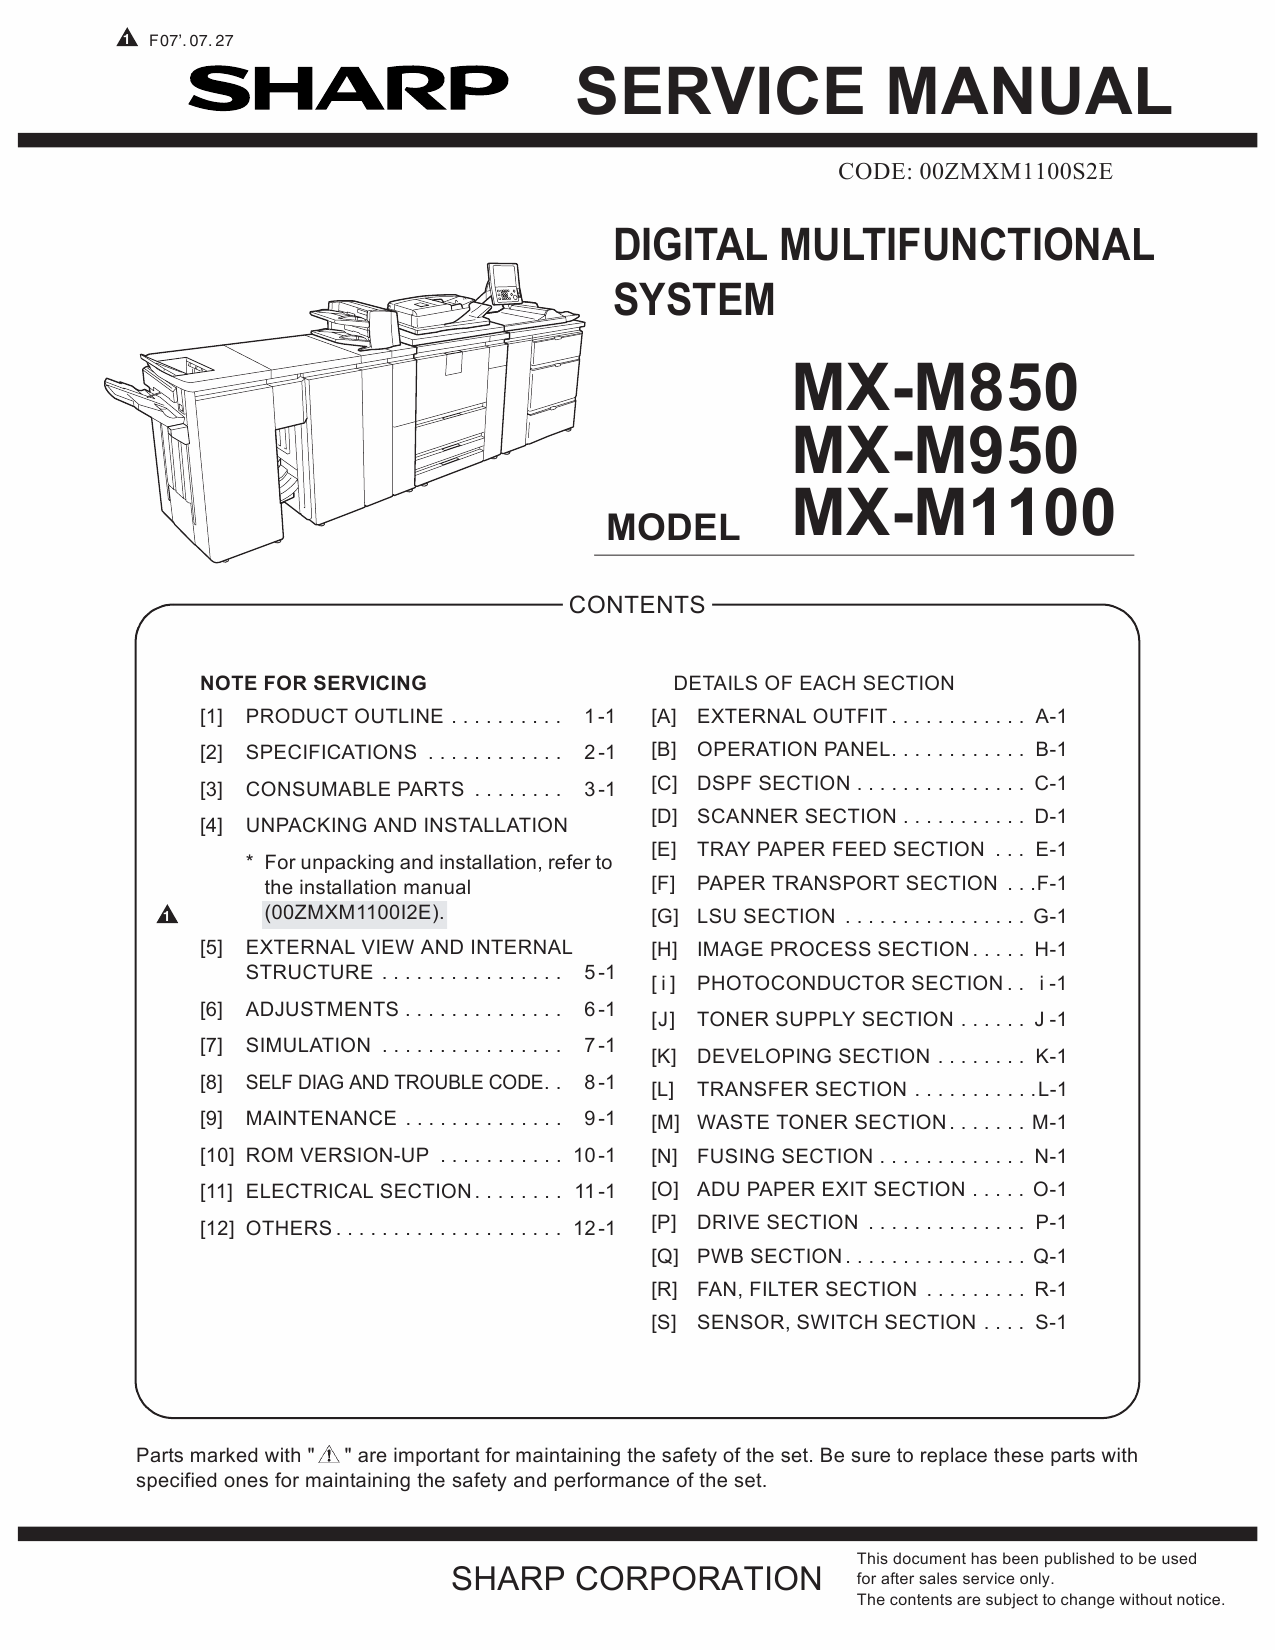 SHARP MX M850 M950 M1100 Service Manual-1